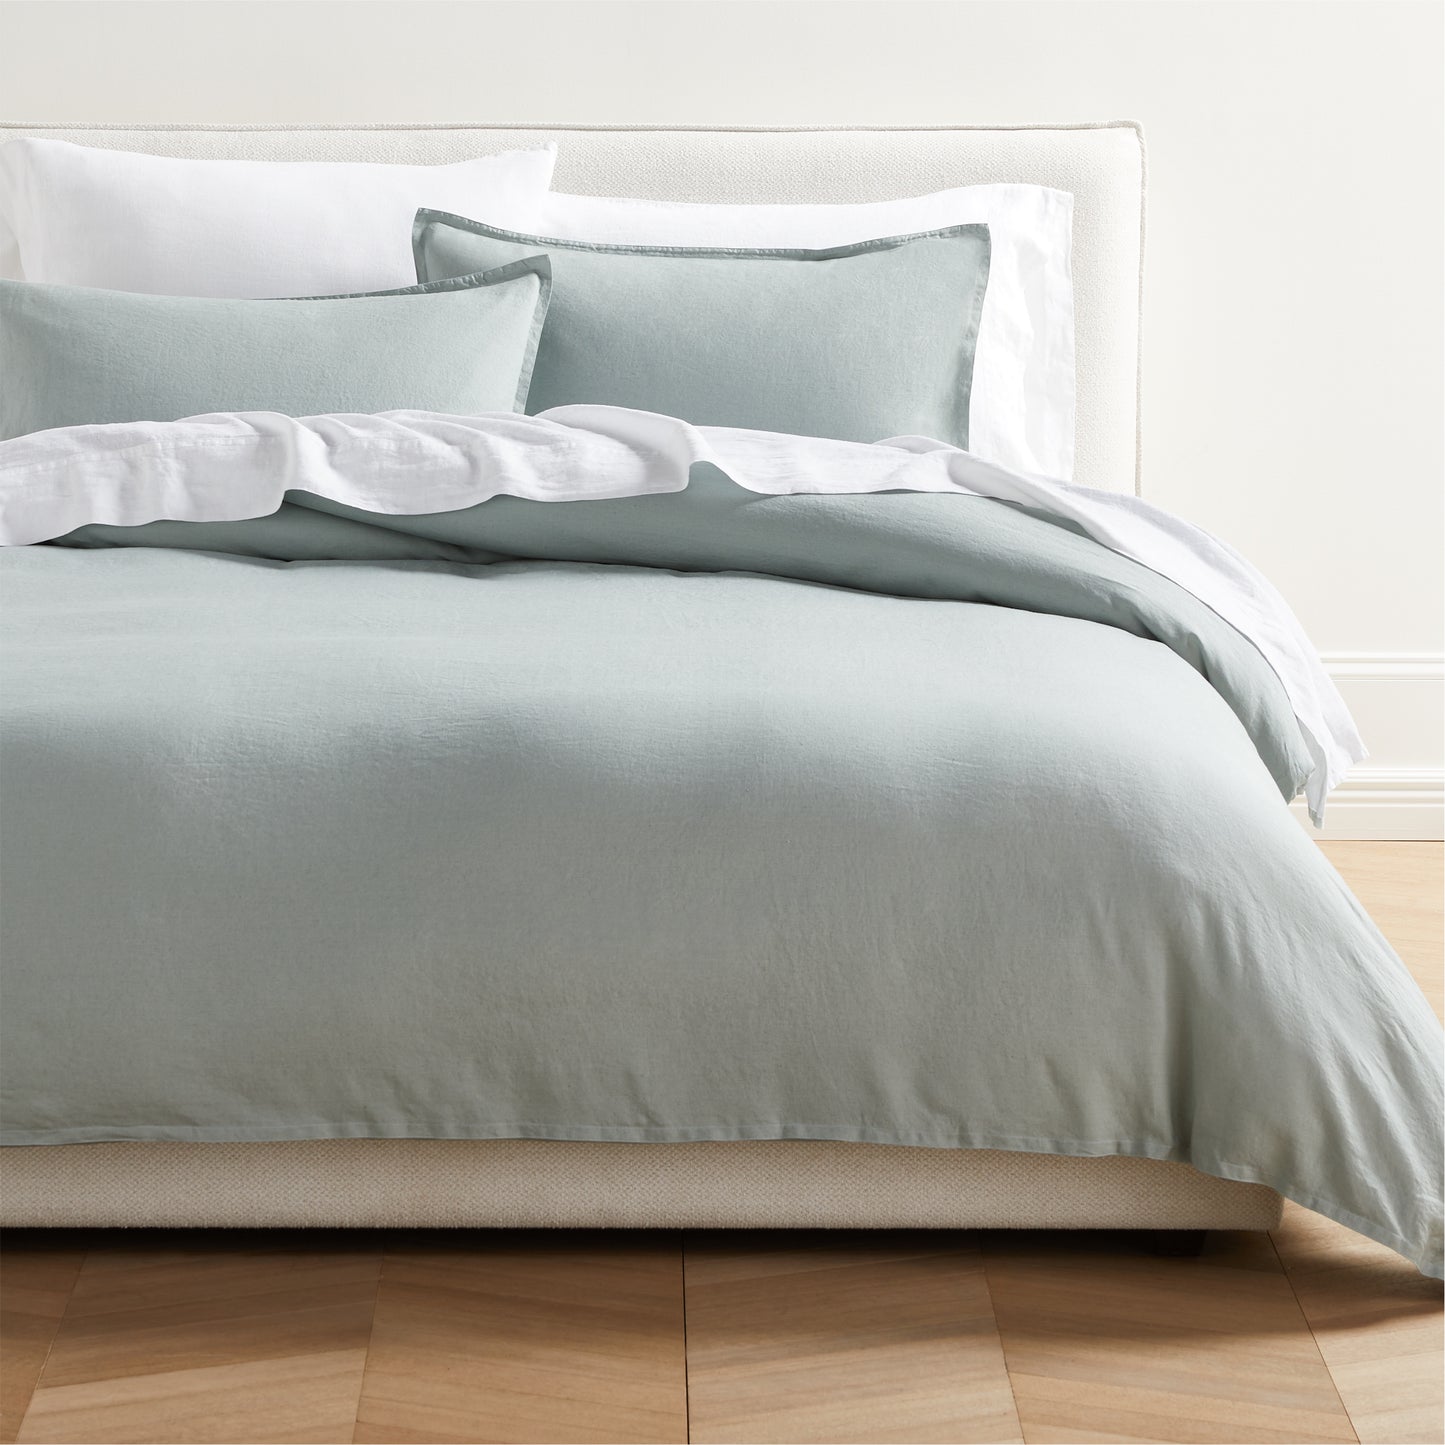 Sage Green Washed Linen Pillow Shams, set of 2